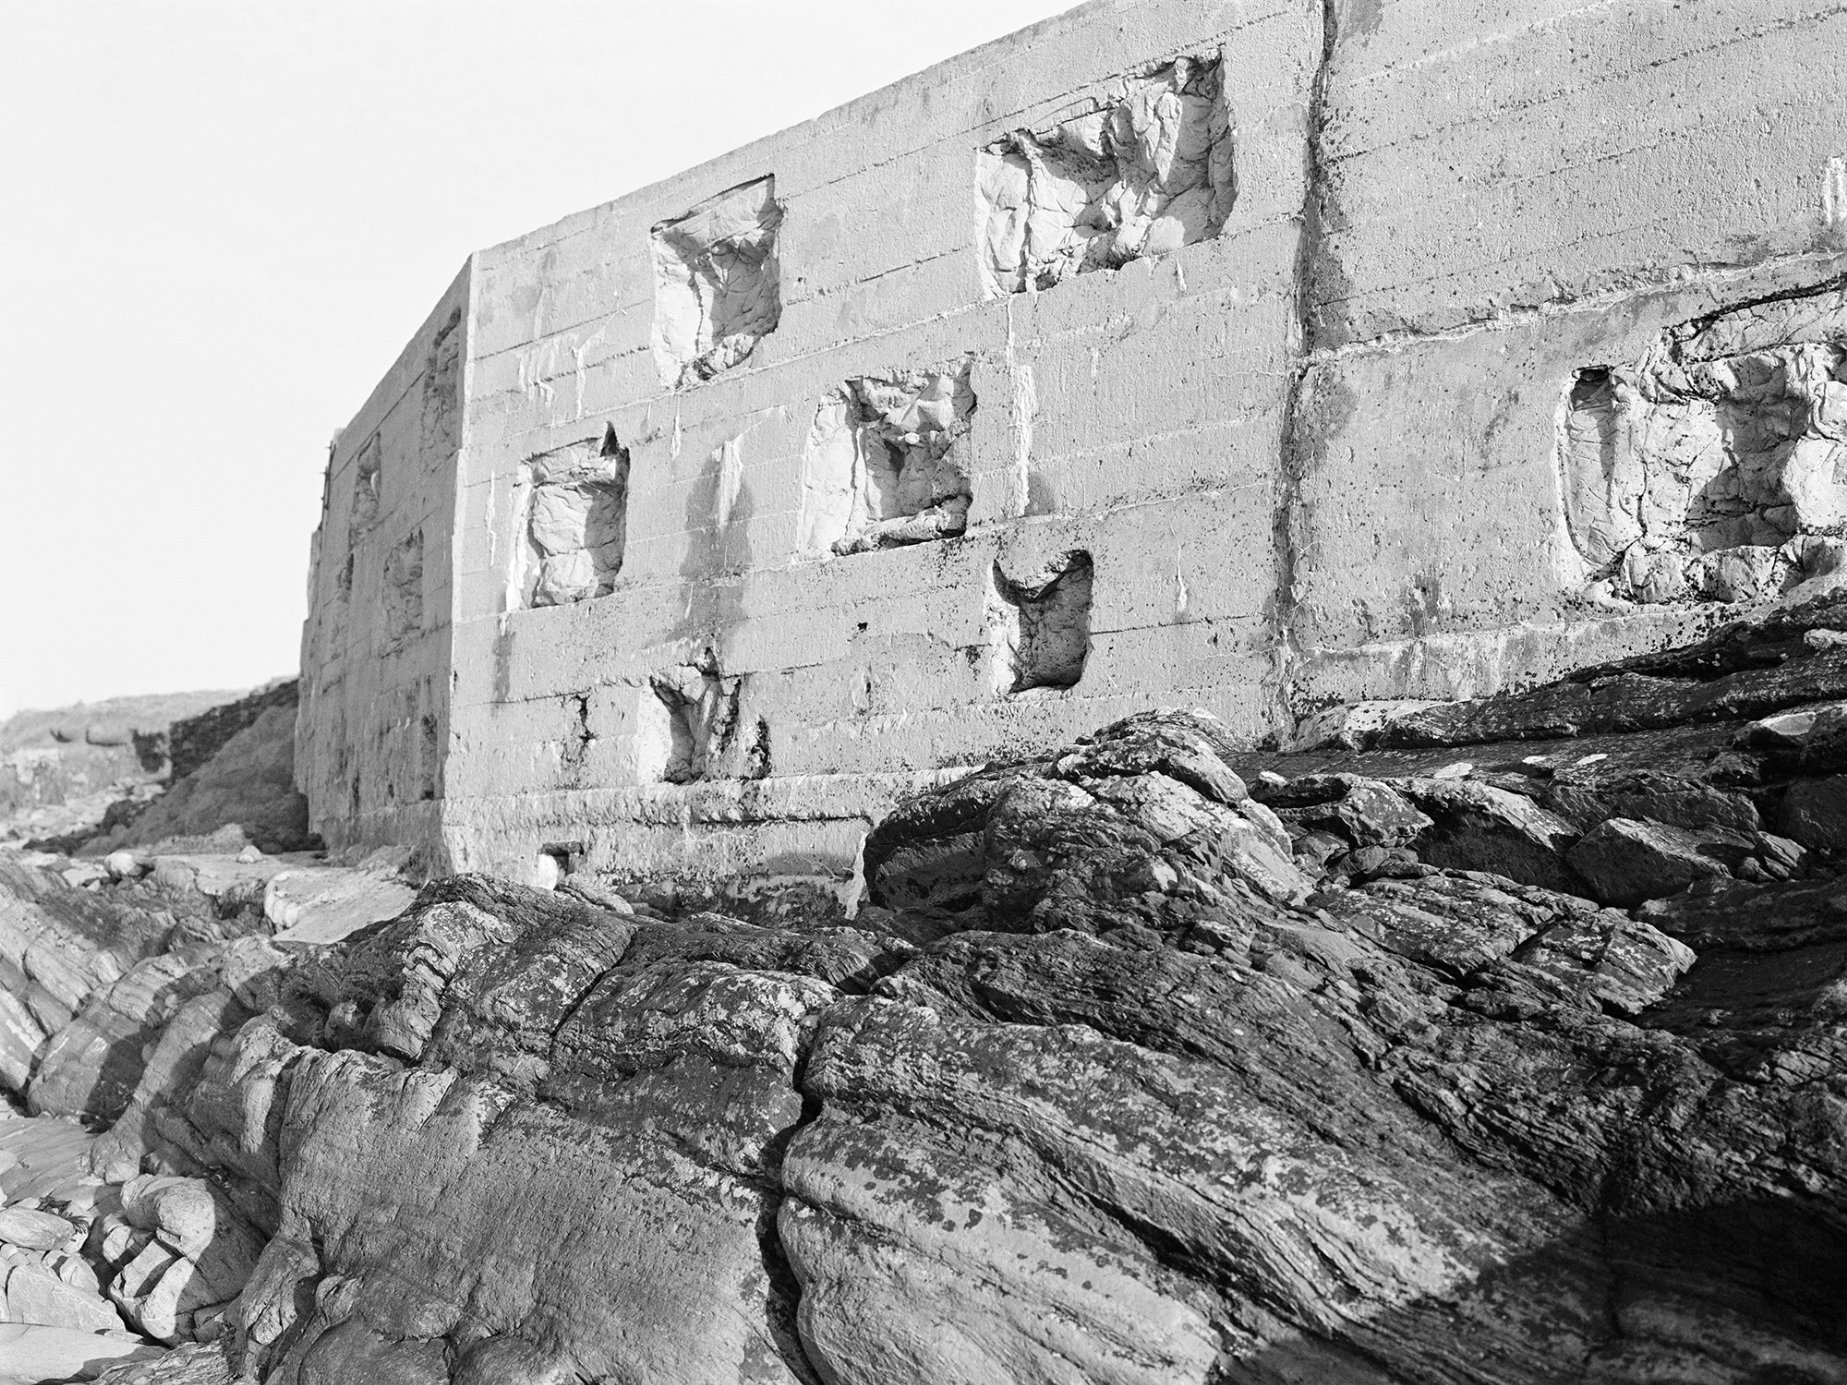 Sea wall in Papa Westray, Orkney - image by Frances Scott